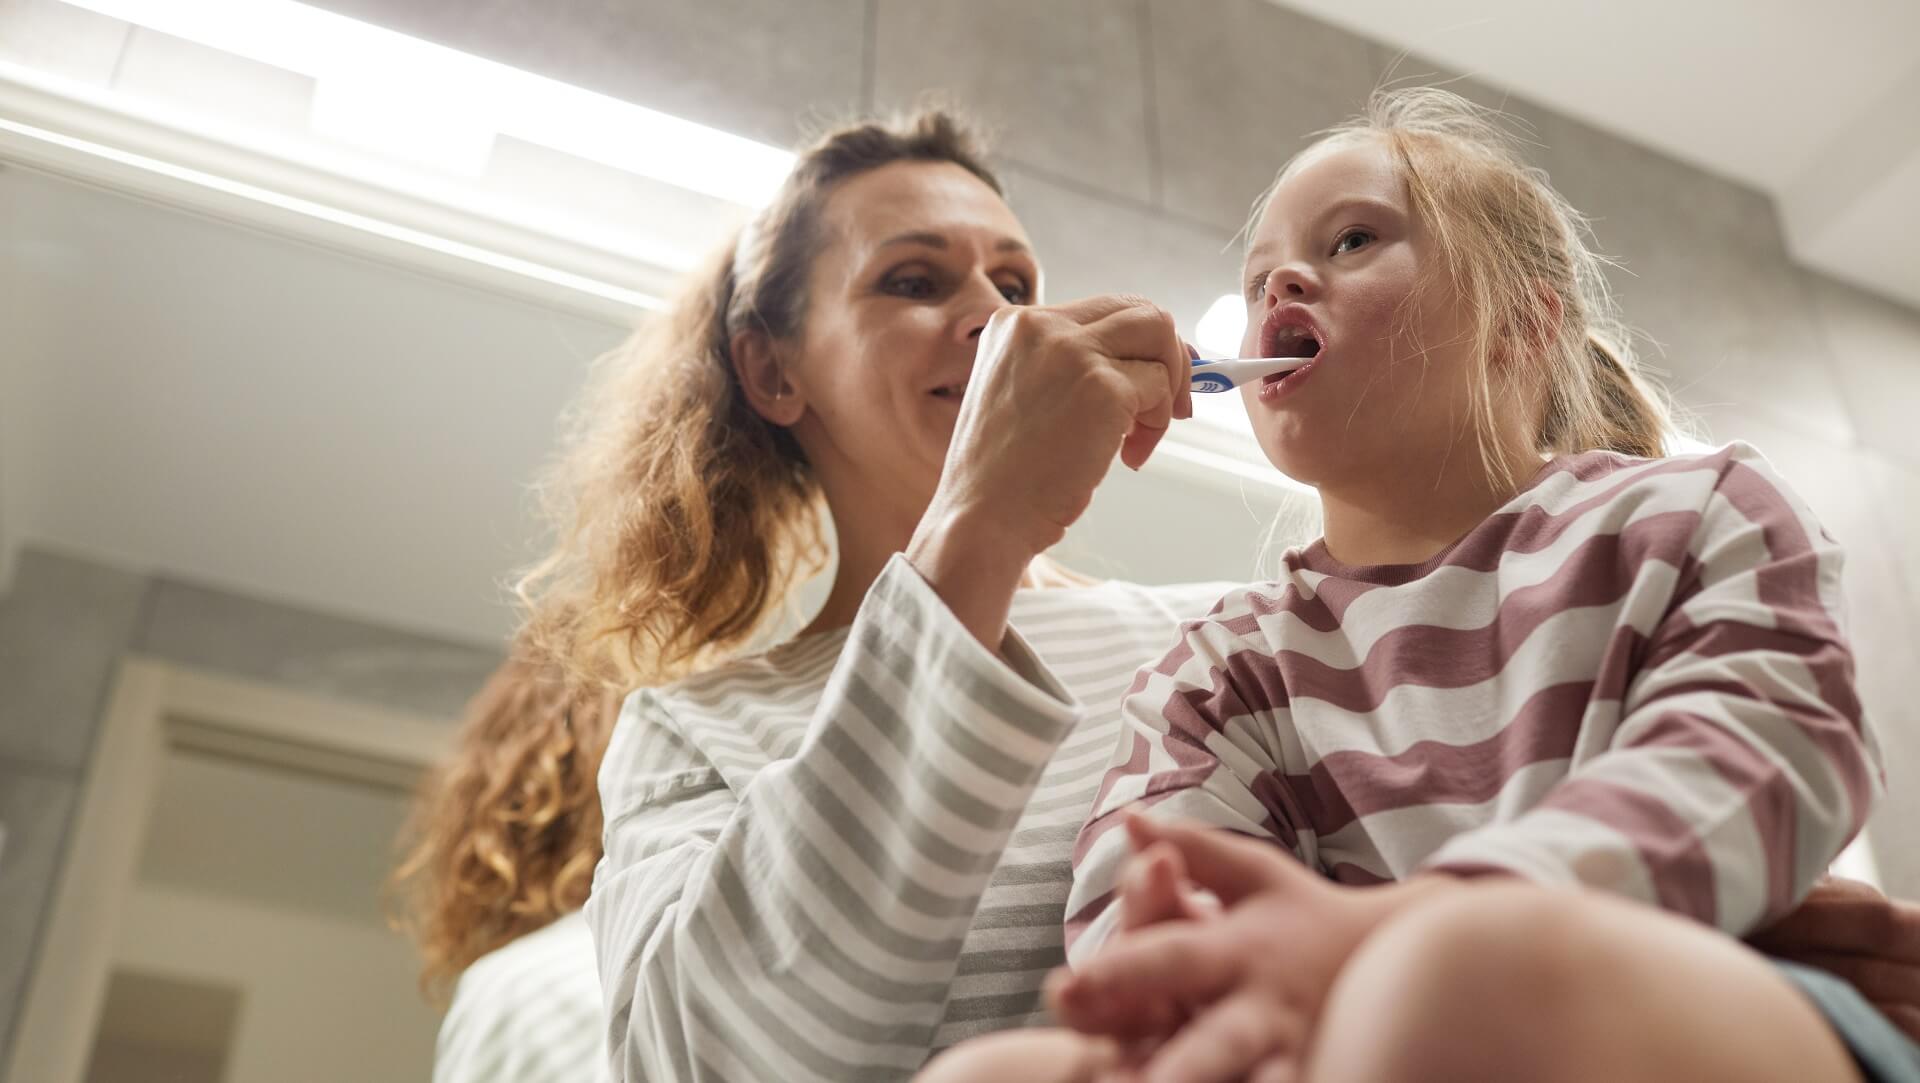 Woman brushing a young girl’s teeth